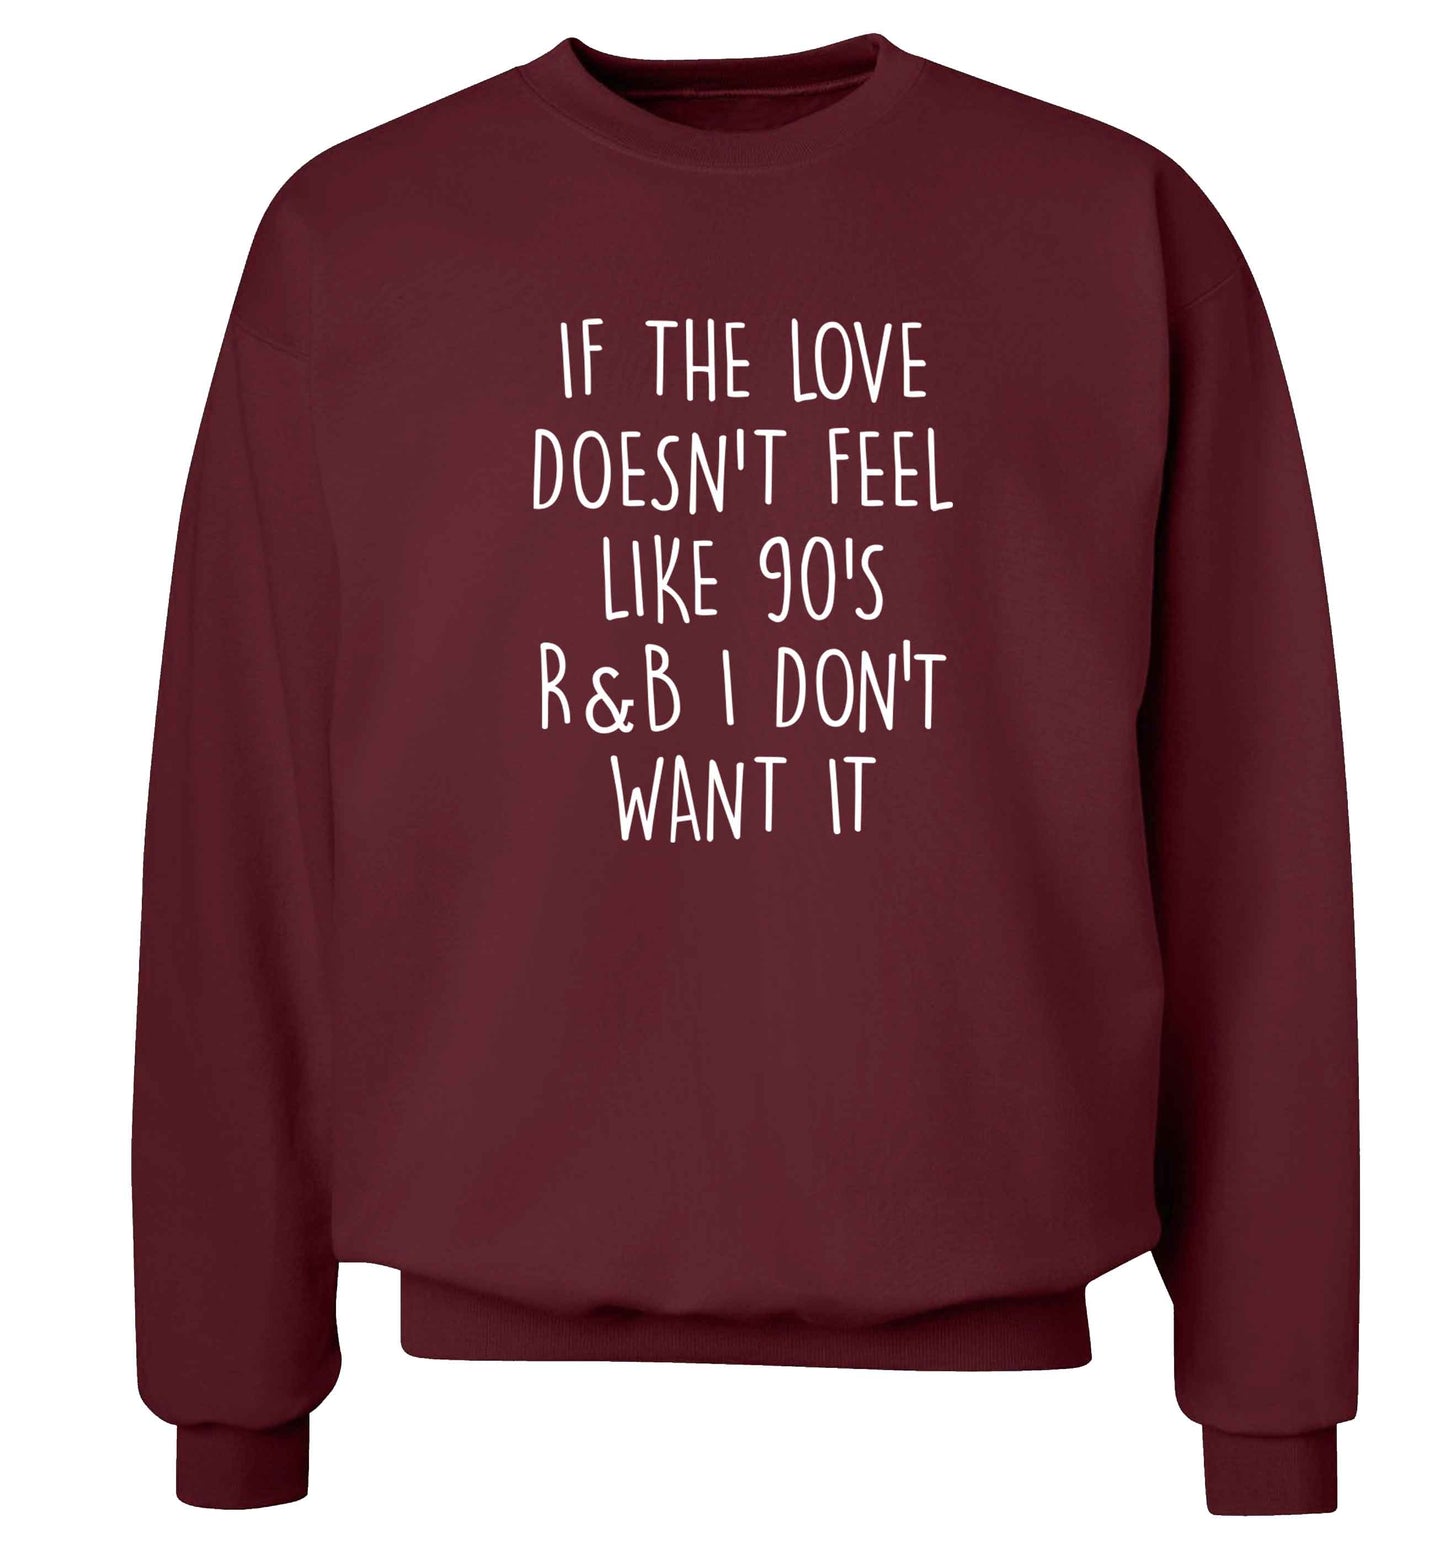 If the love doesn't feel like 90's r&b I don't want it adult's unisex maroon sweater 2XL